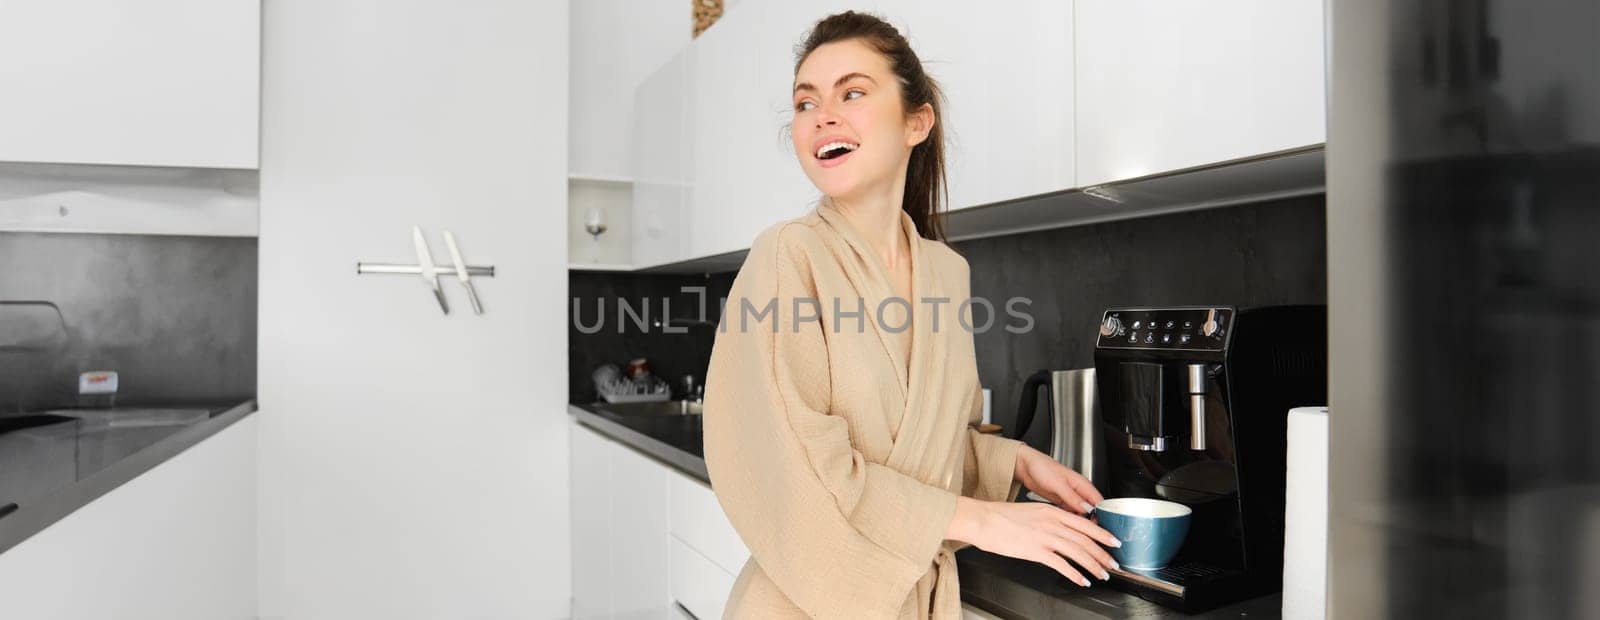 Portrait of happy smiling woman in the kitchen, using coffee machine to make herself morning mug, preparing cappuccino, wearing bathrobe.